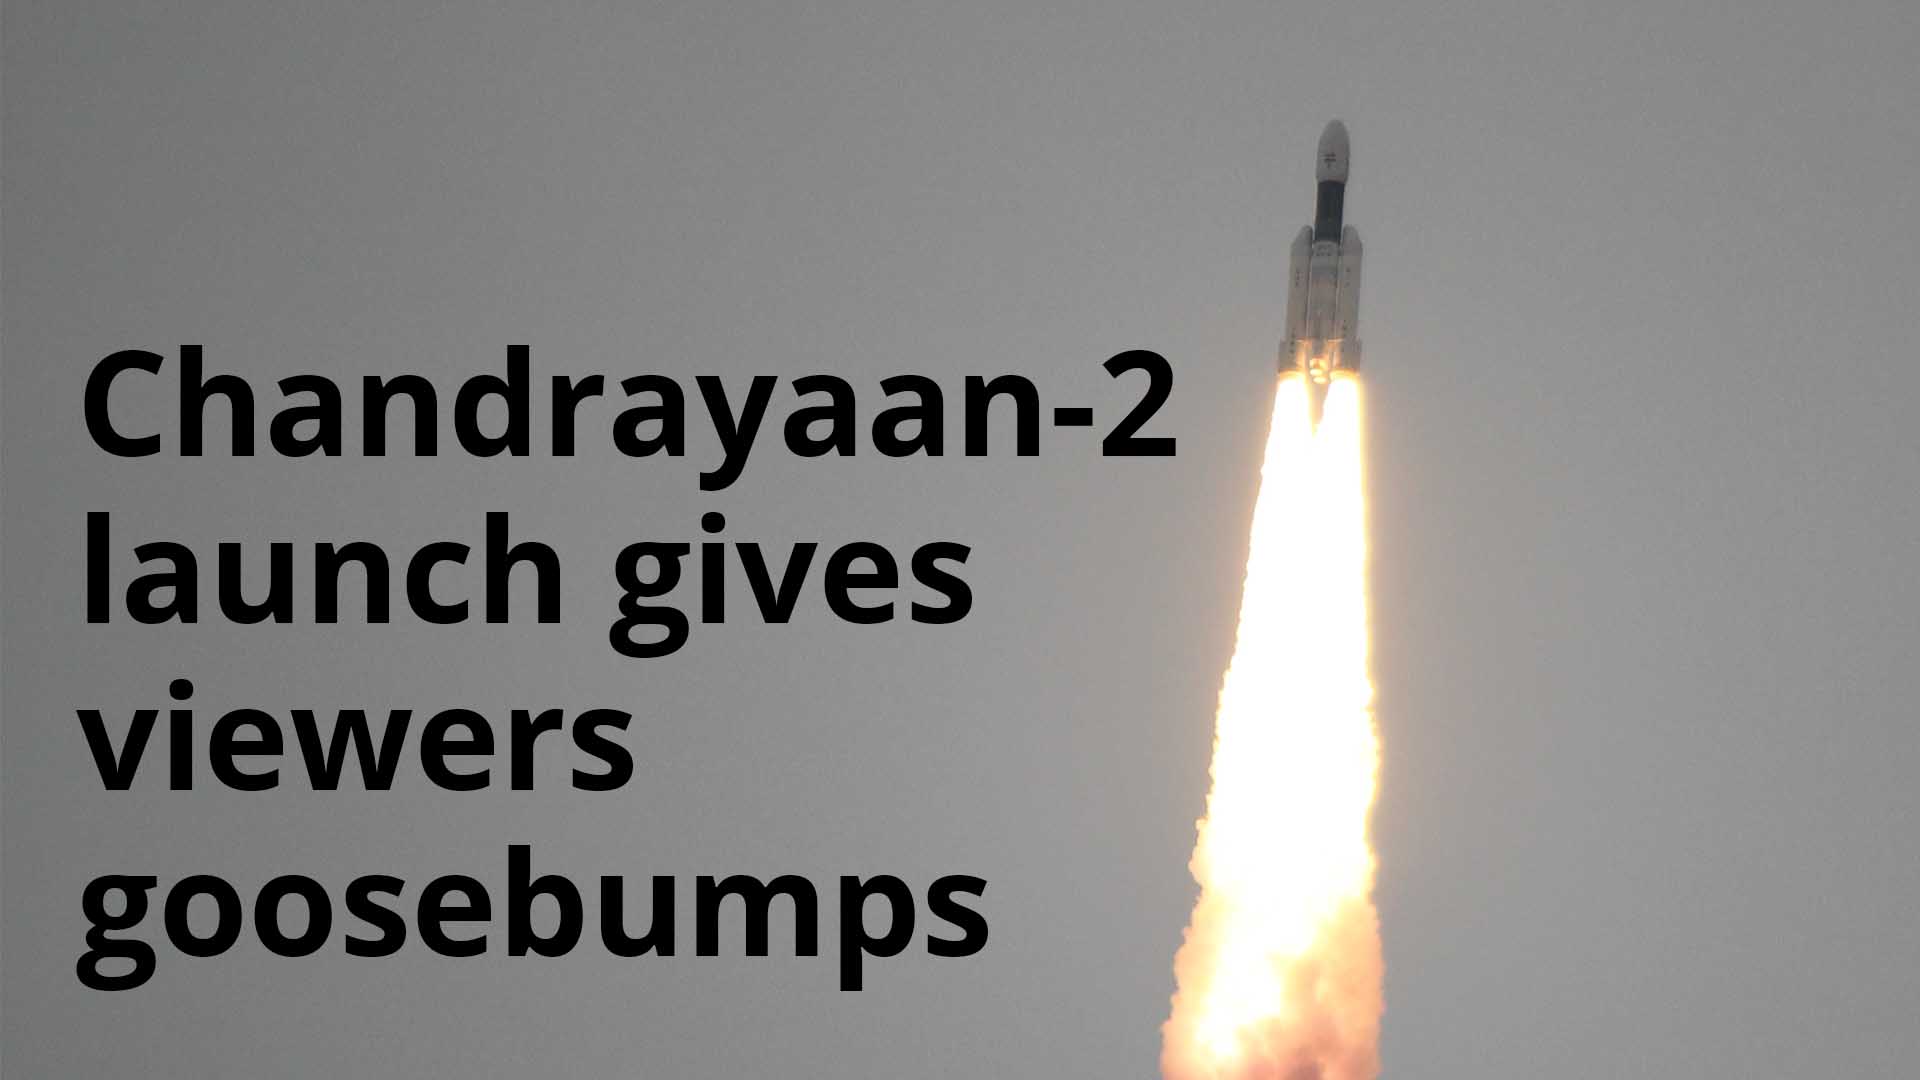 Chandrayaan-2 launch gives viewers goosebumps